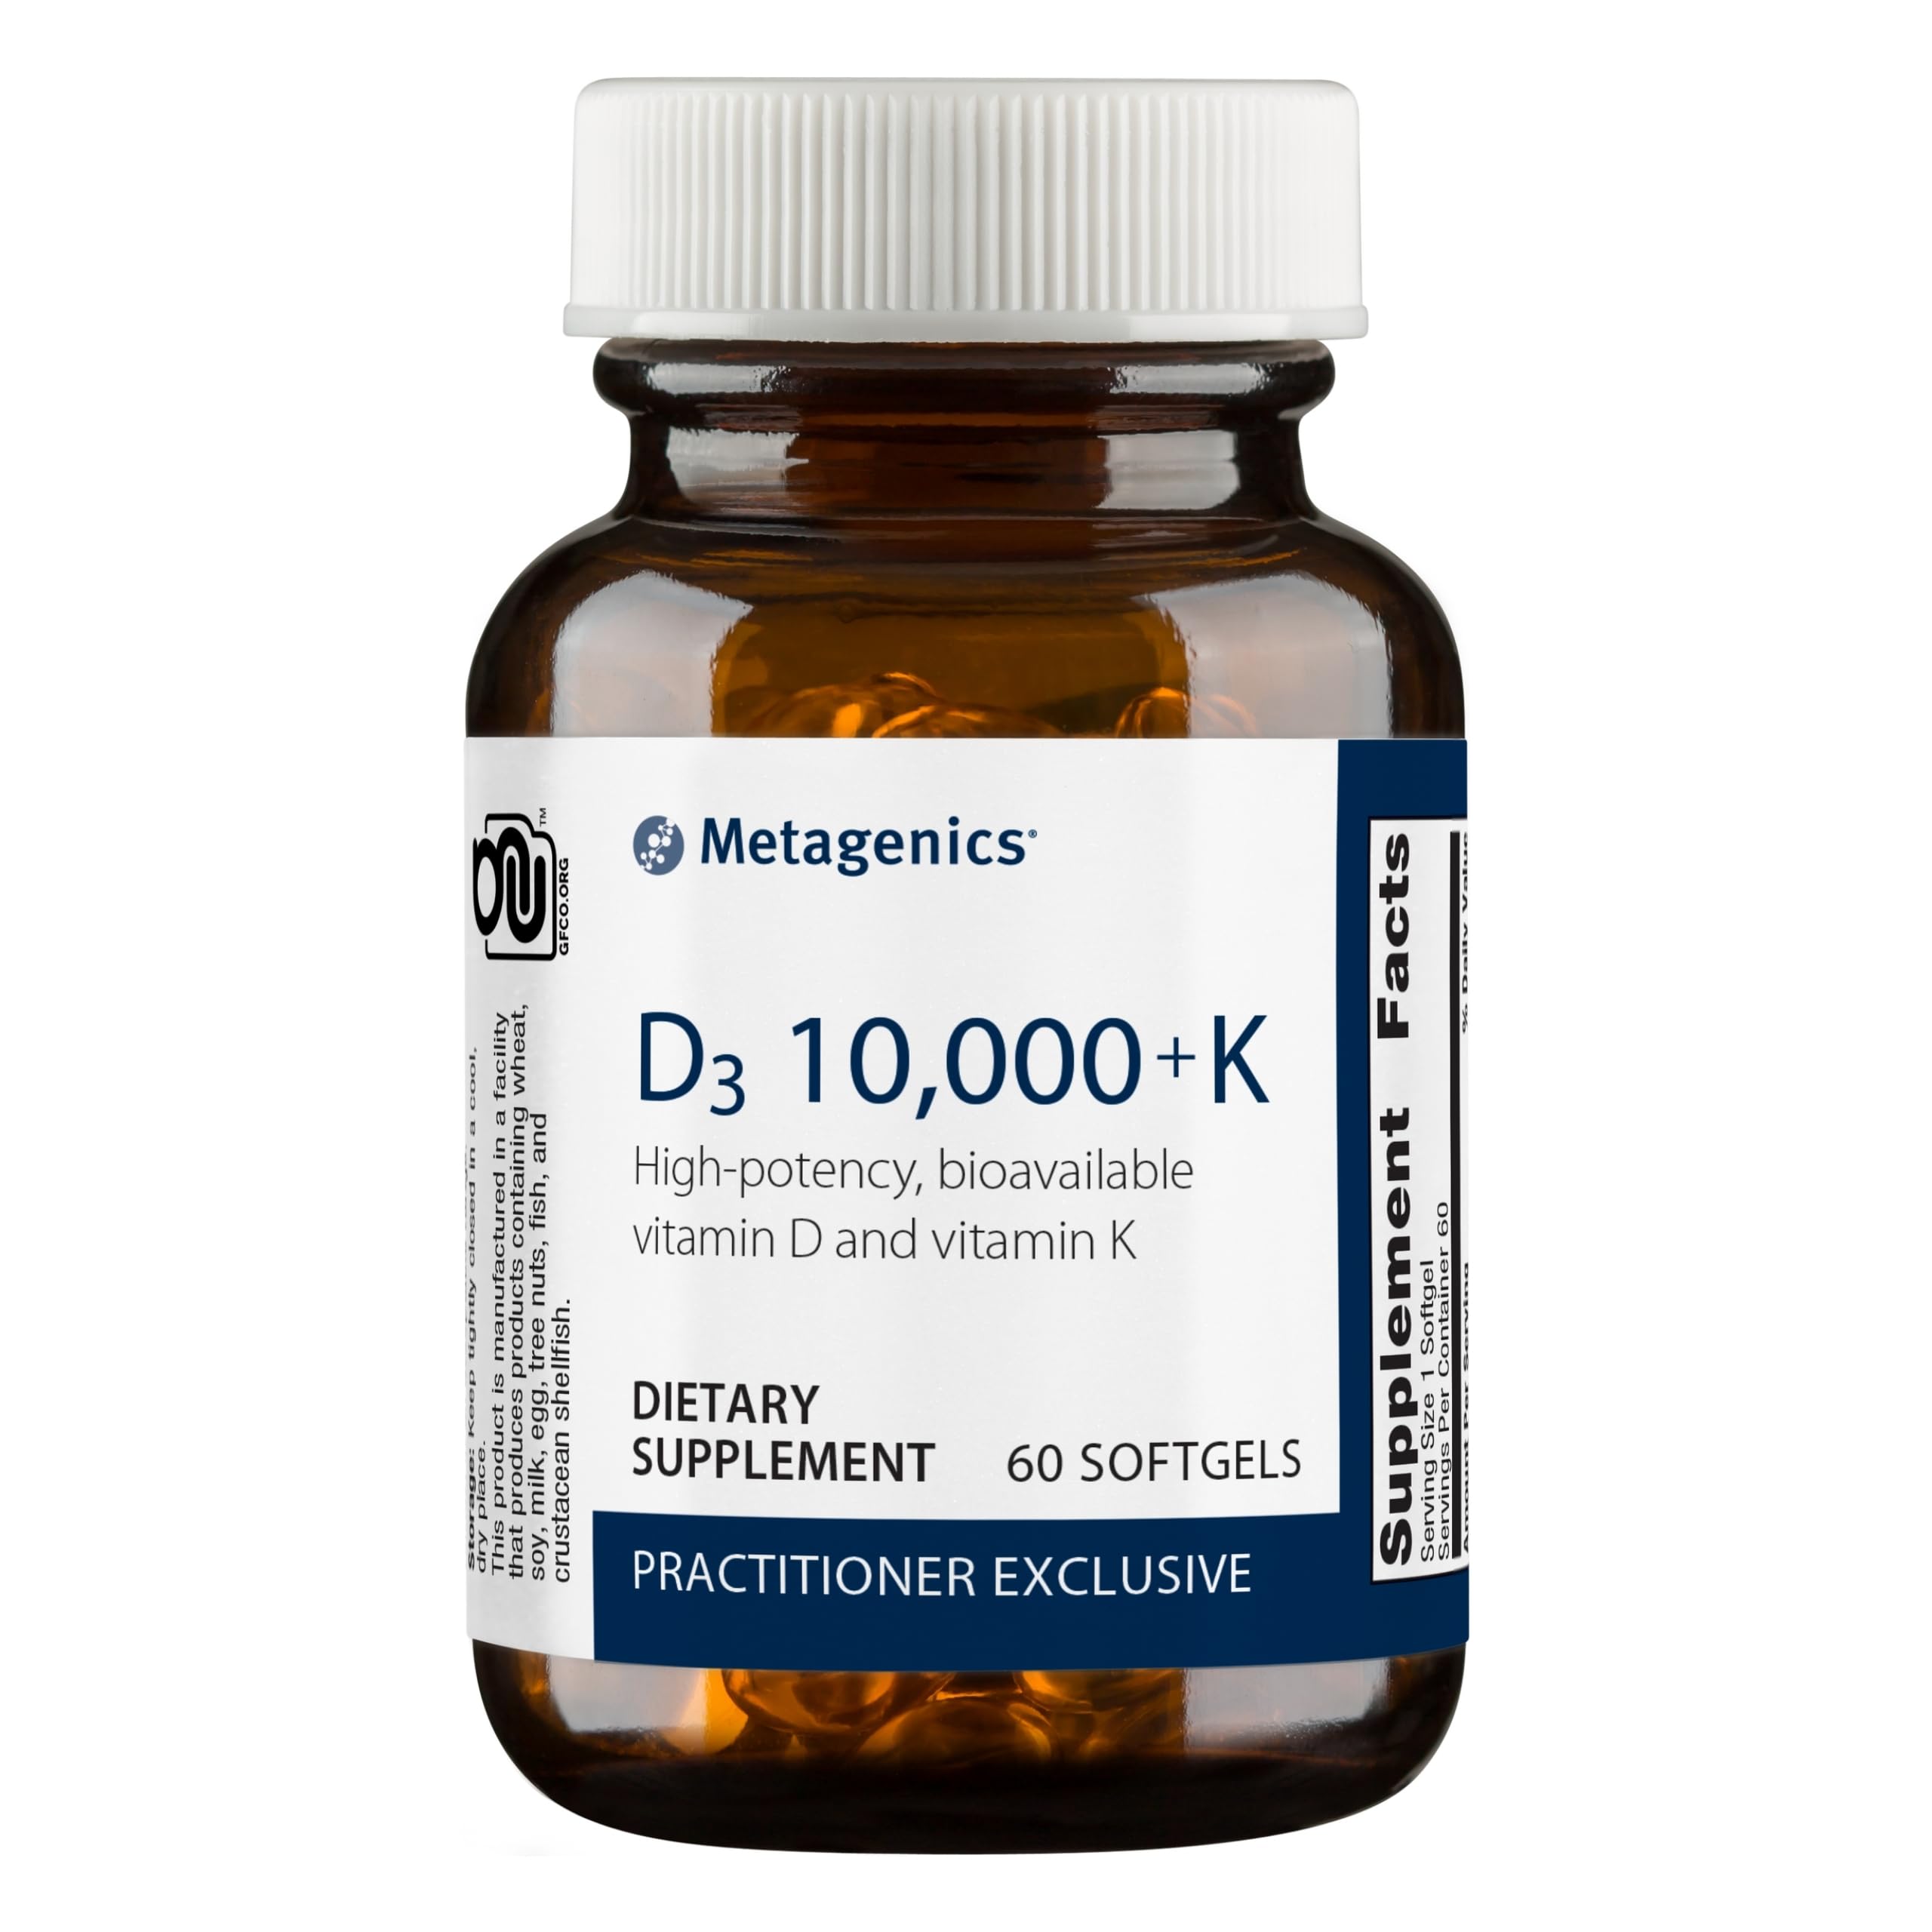 Metagenics D3 10,000 + K